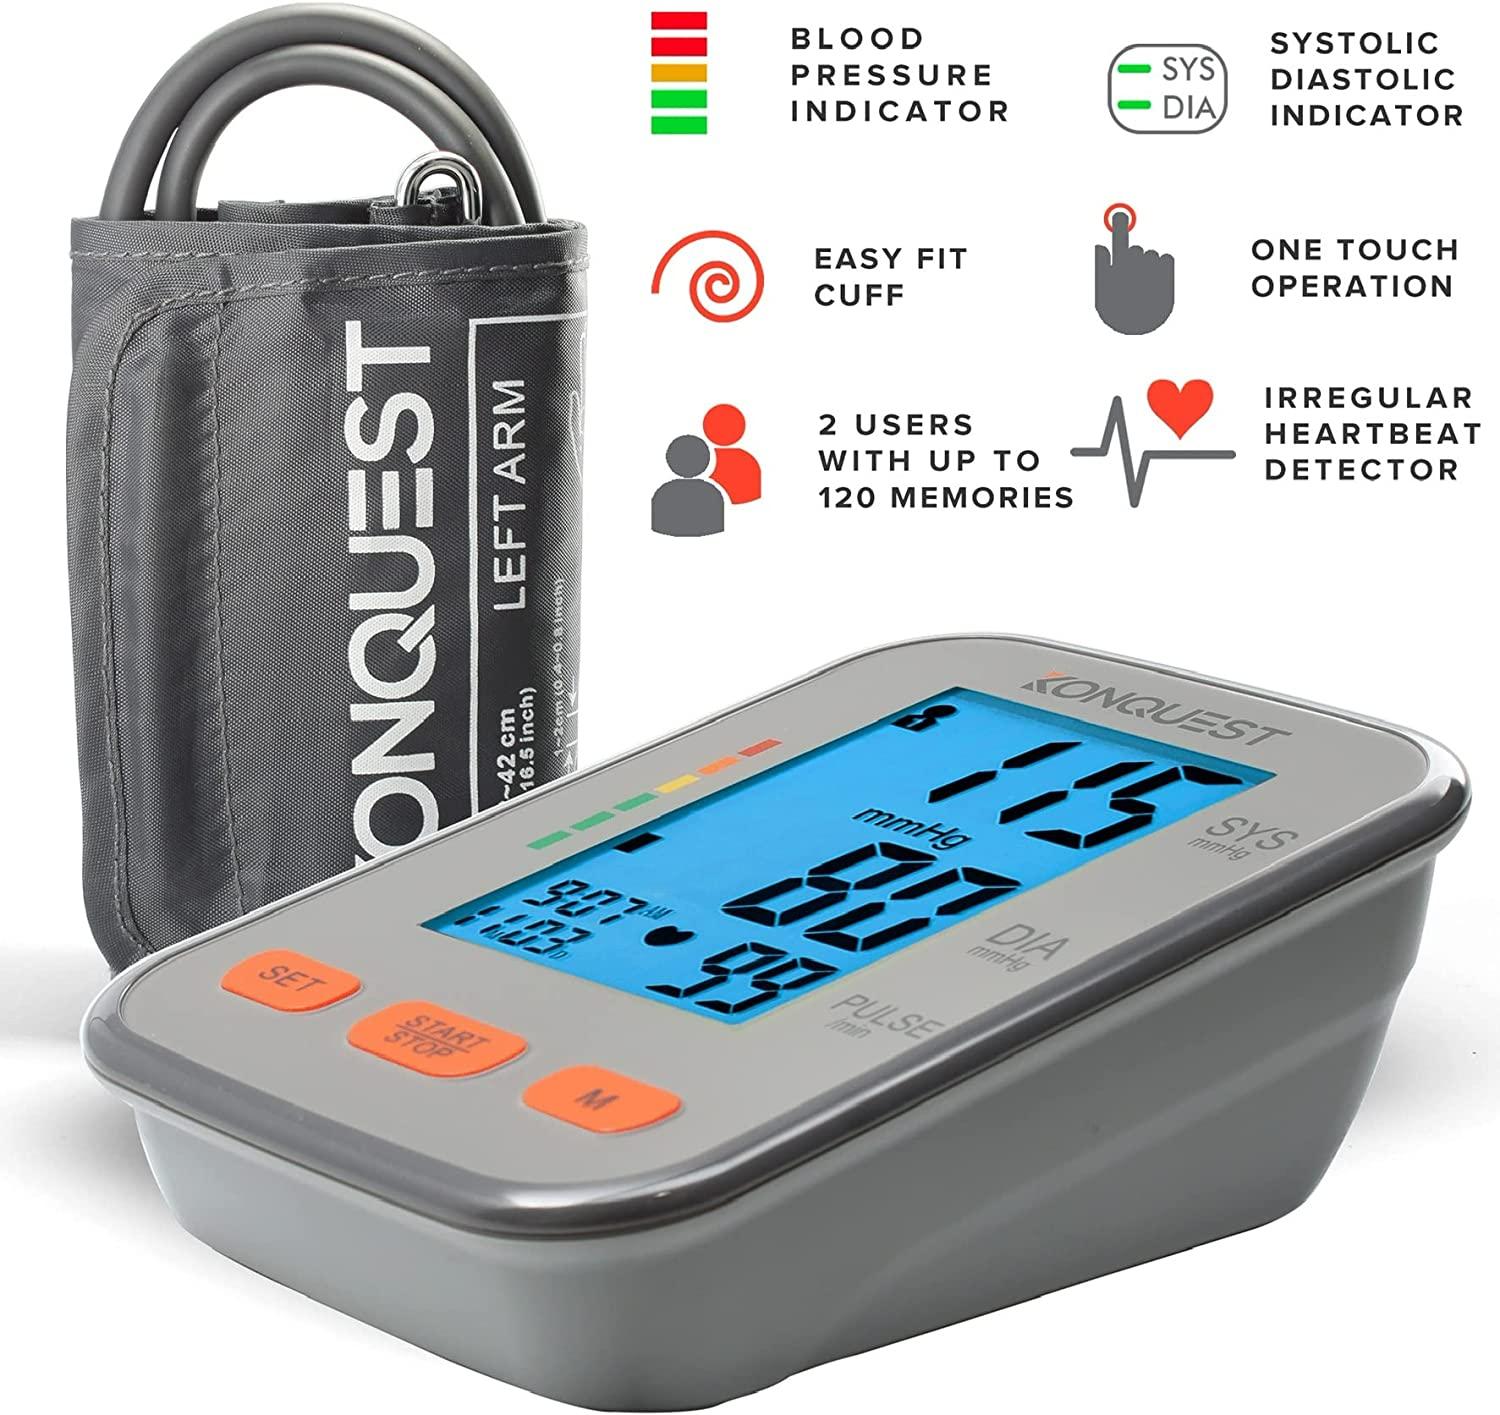 Konquest KBP-2704A Digital Blood Pressure Monitor - Brand New & Sealed  869378000438